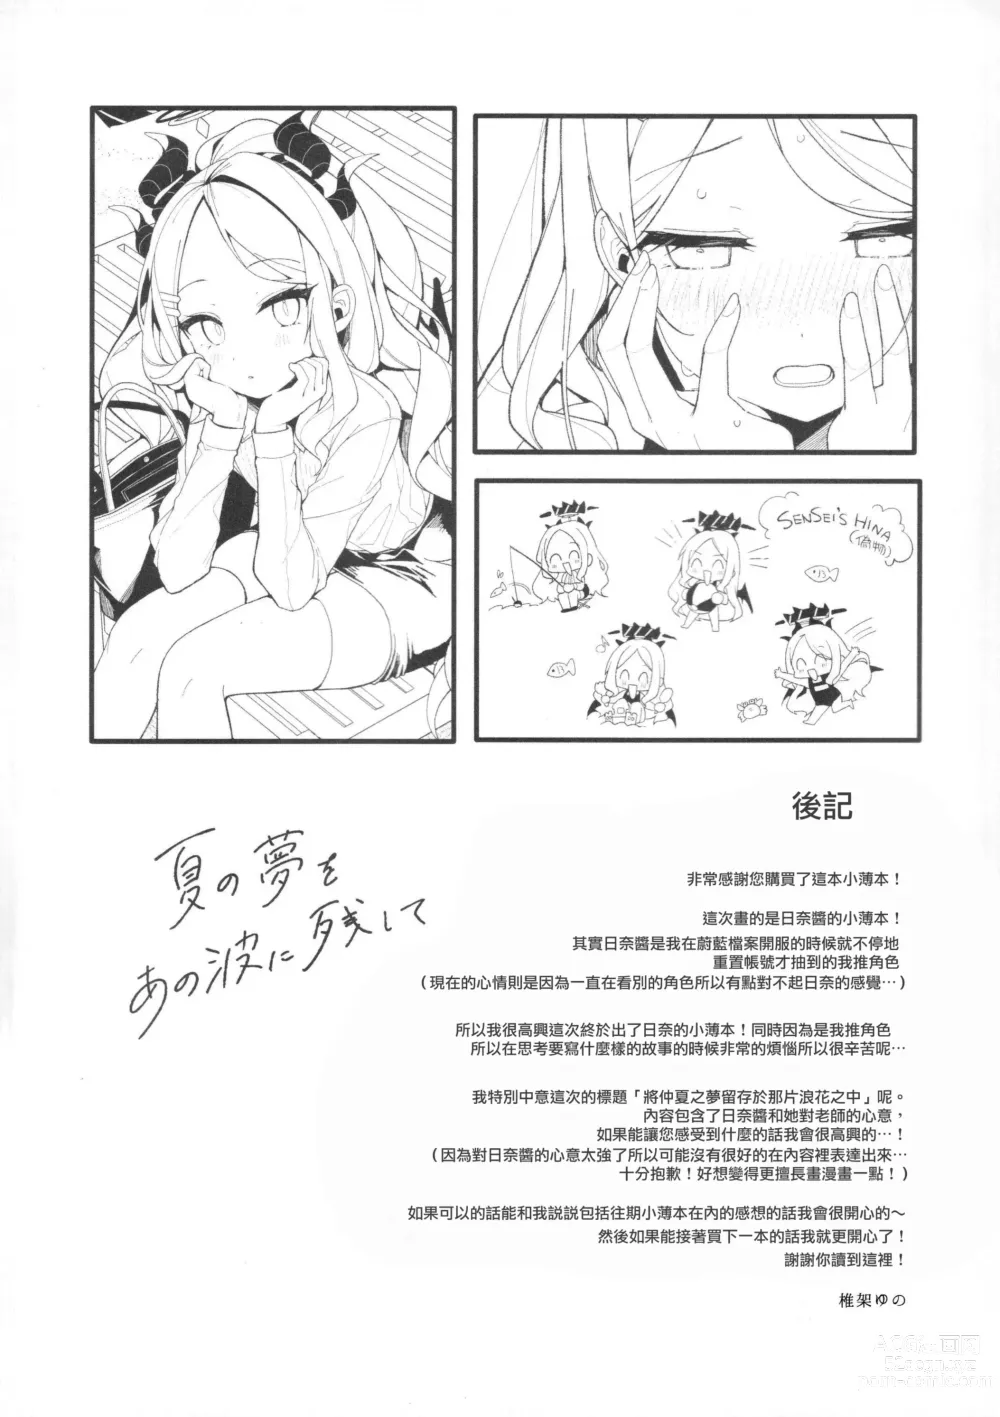 Page 24 of doujinshi 將仲夏之夢留存於那片浪花之中